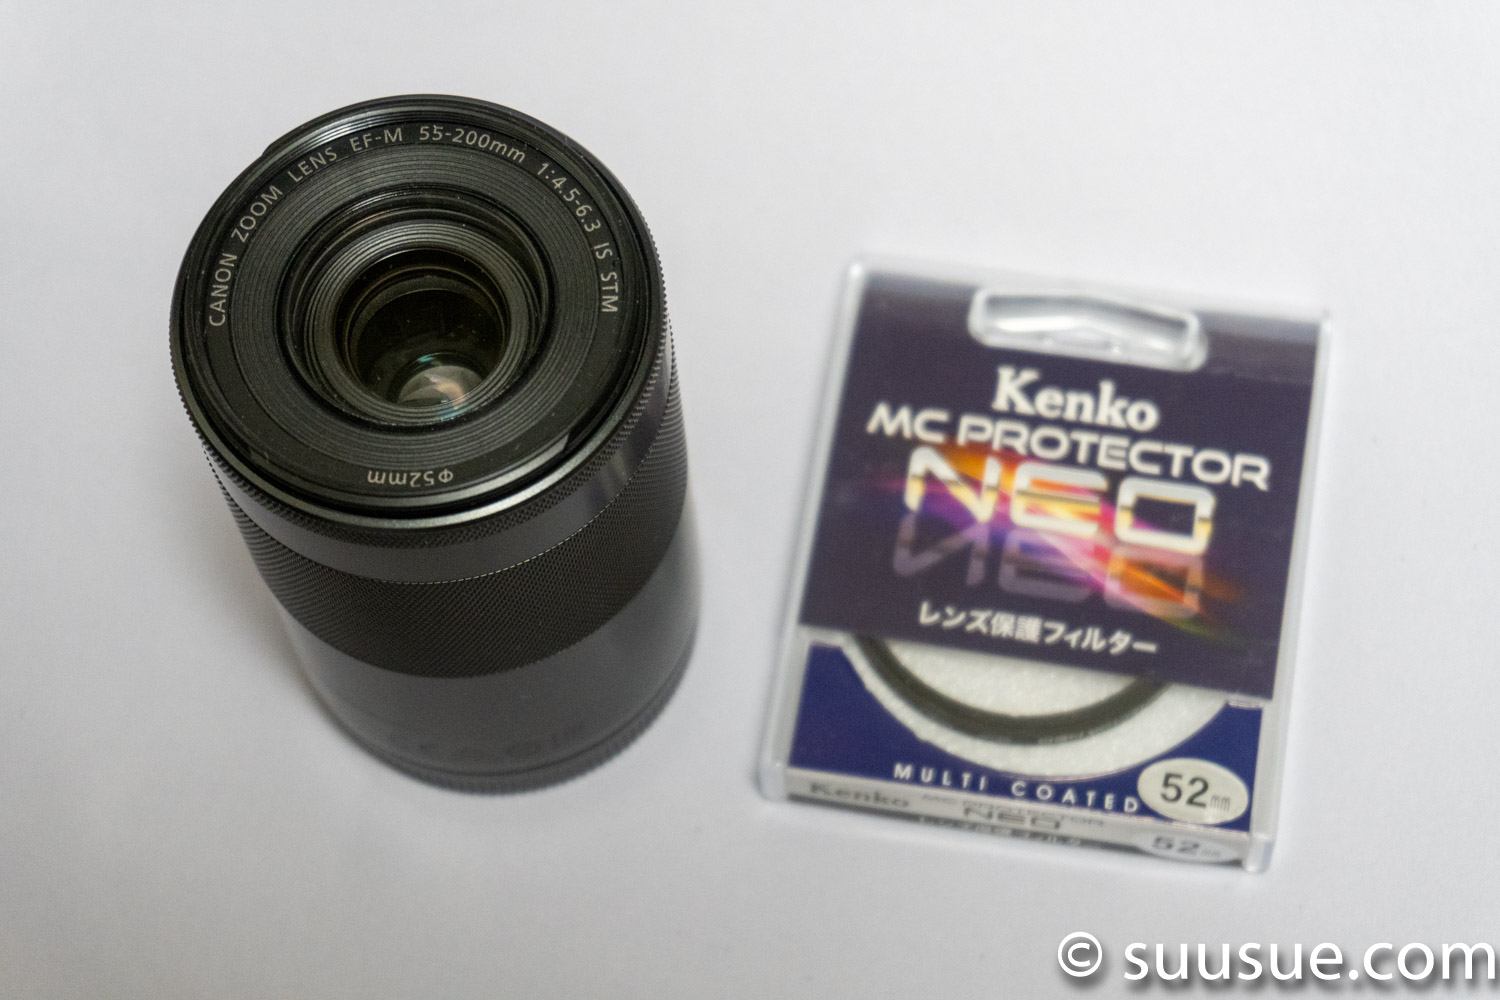 Kenko MC Protector NEO 52mm 対応のレンズ EF-M55-200mm F4.5-6.3 IS STM